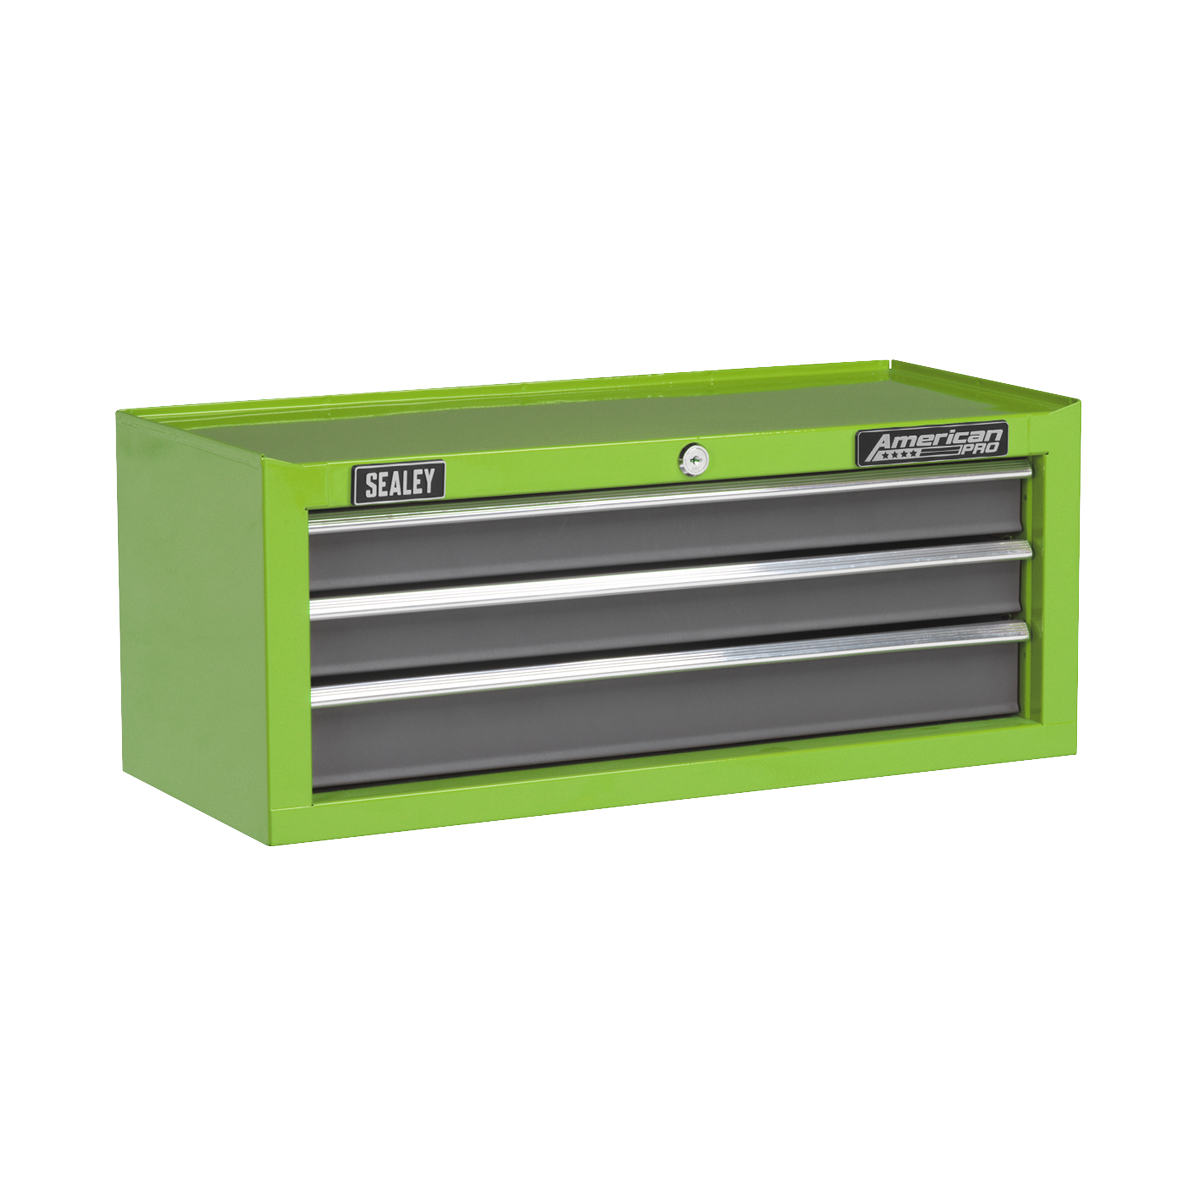 Sealey Mid-Box 3 Drawer with Ball-Bearing Slides - Green/Grey